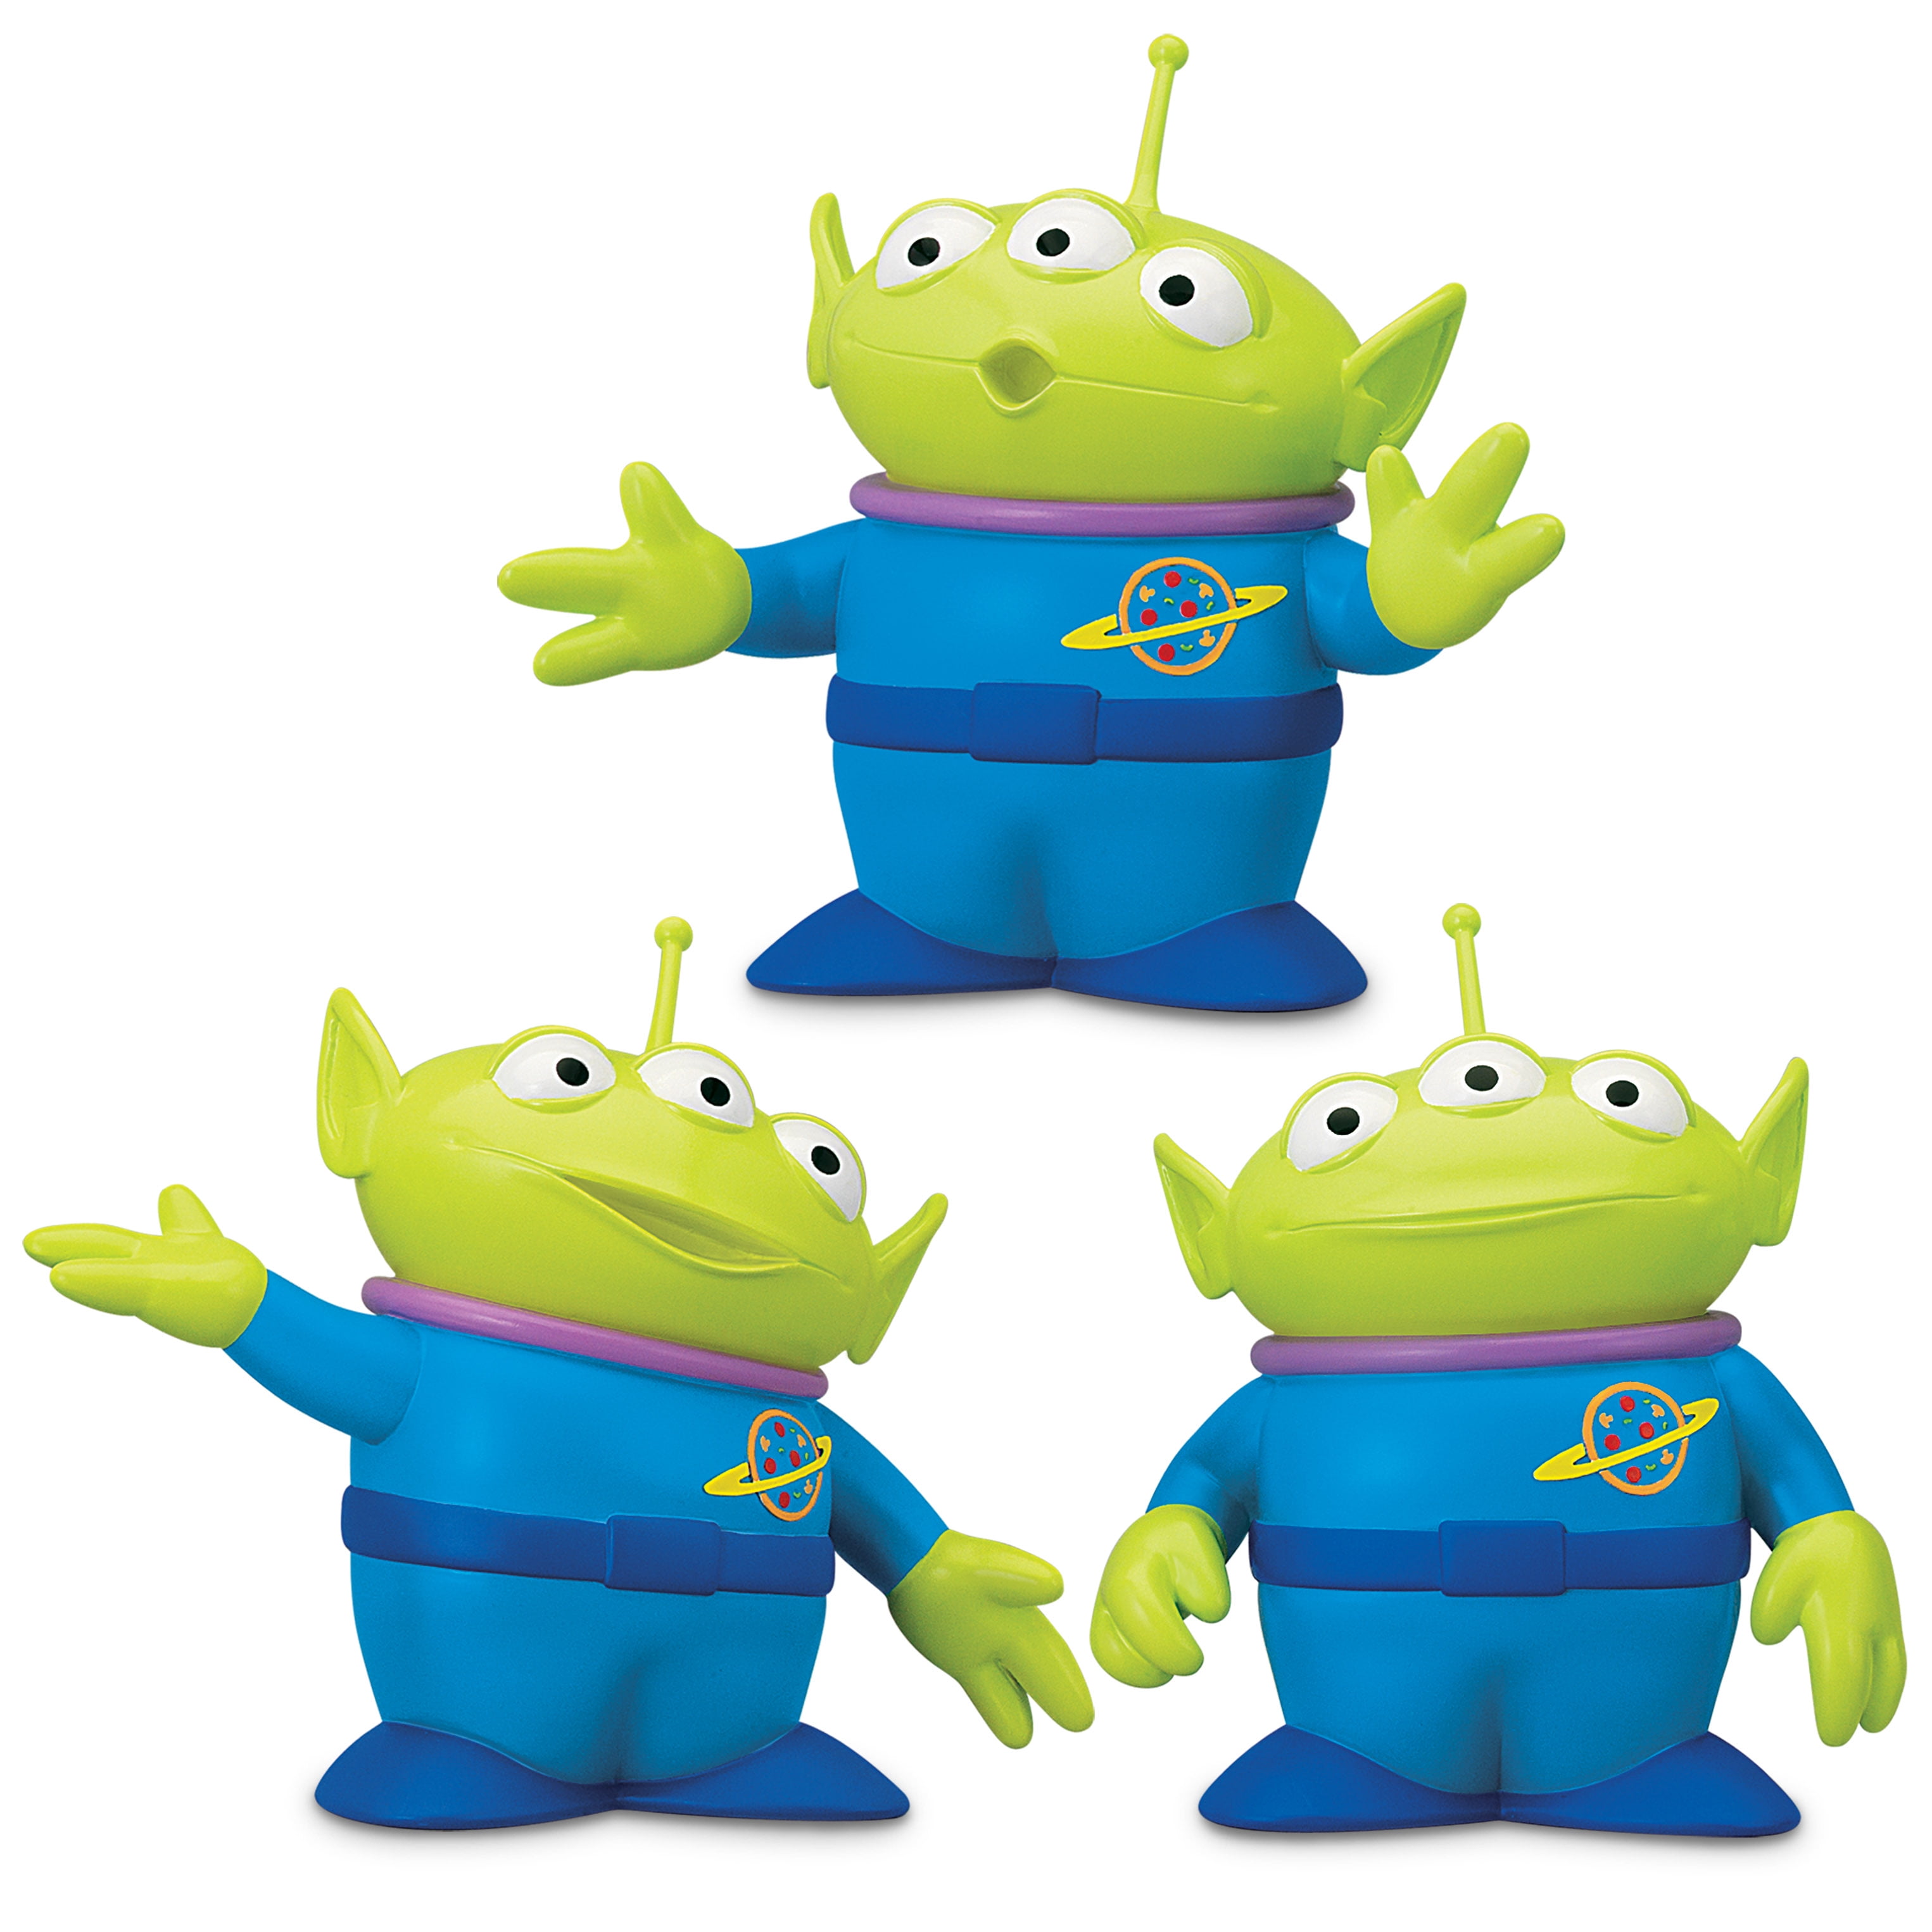 Disney Pixar Toy Story Space Alien Assortment - Walmart.com - Walmart.com